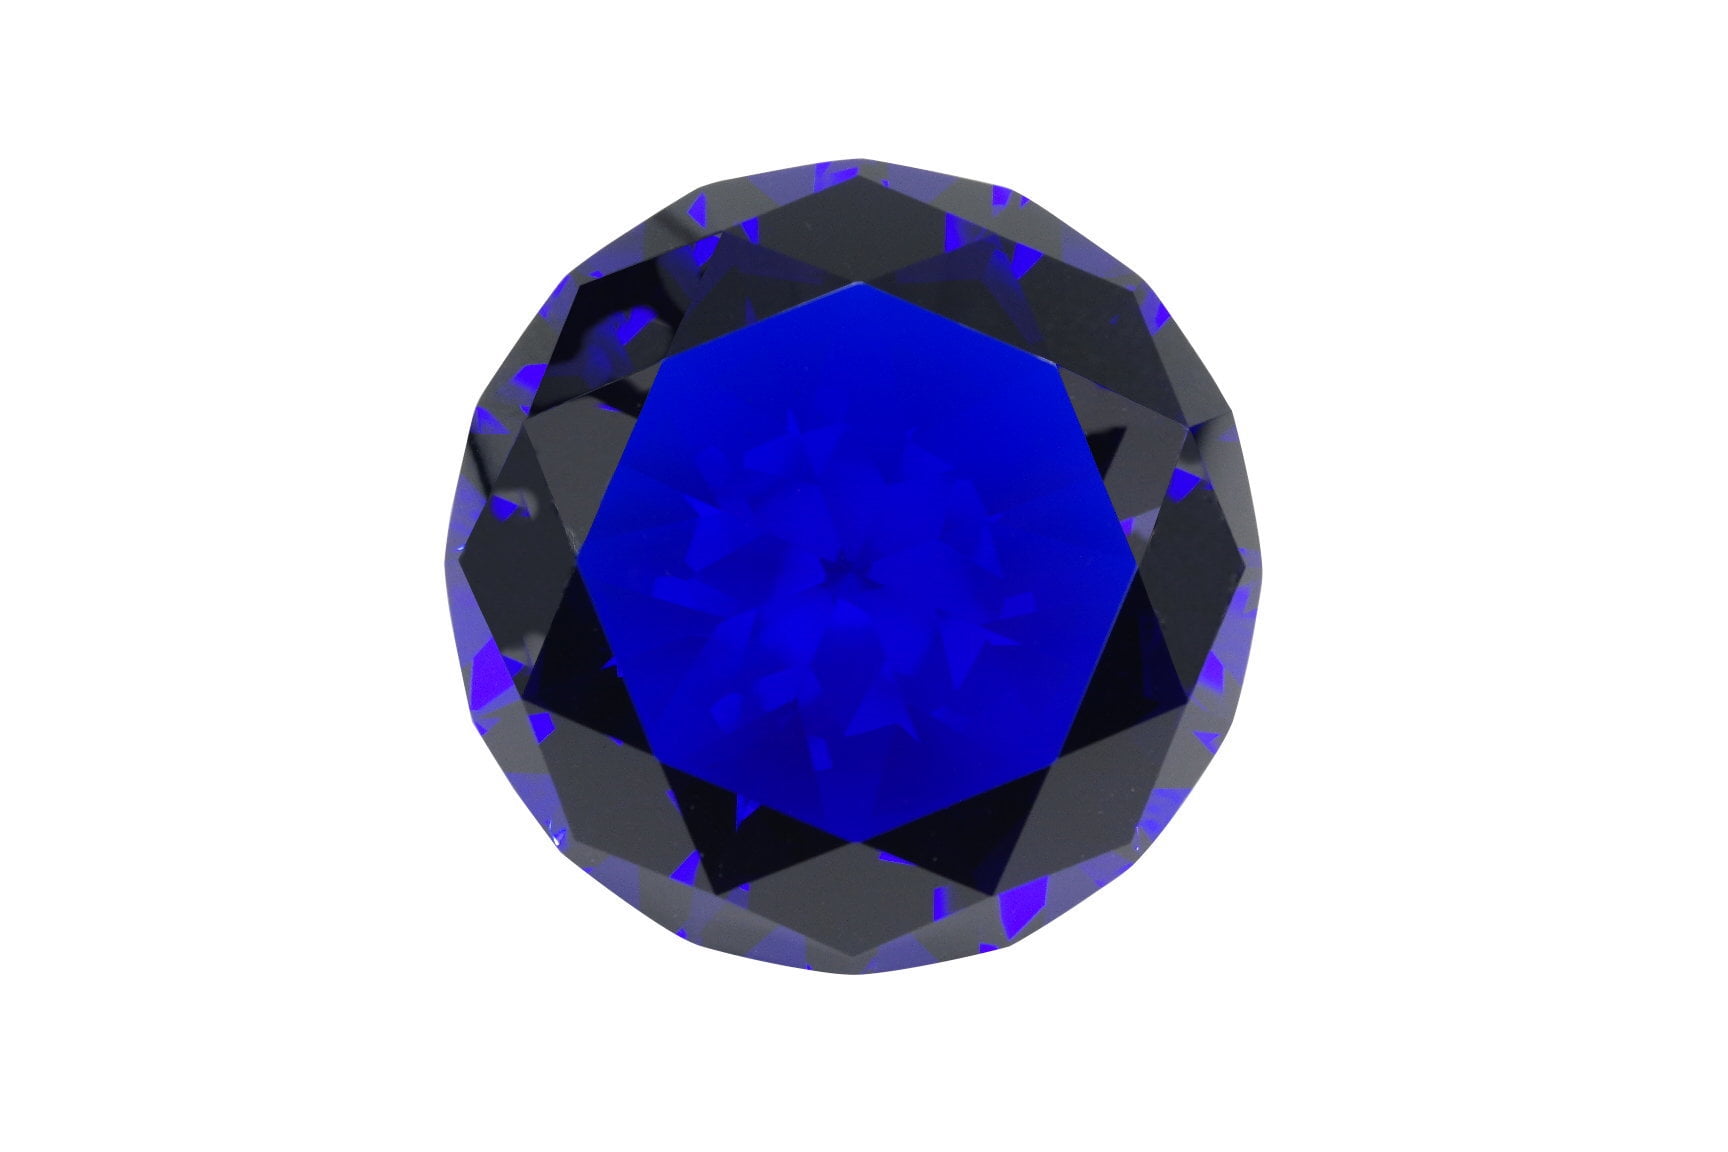 03 Tripact 100 mm Diamond Shaped Jewel Crystal Paperweight 